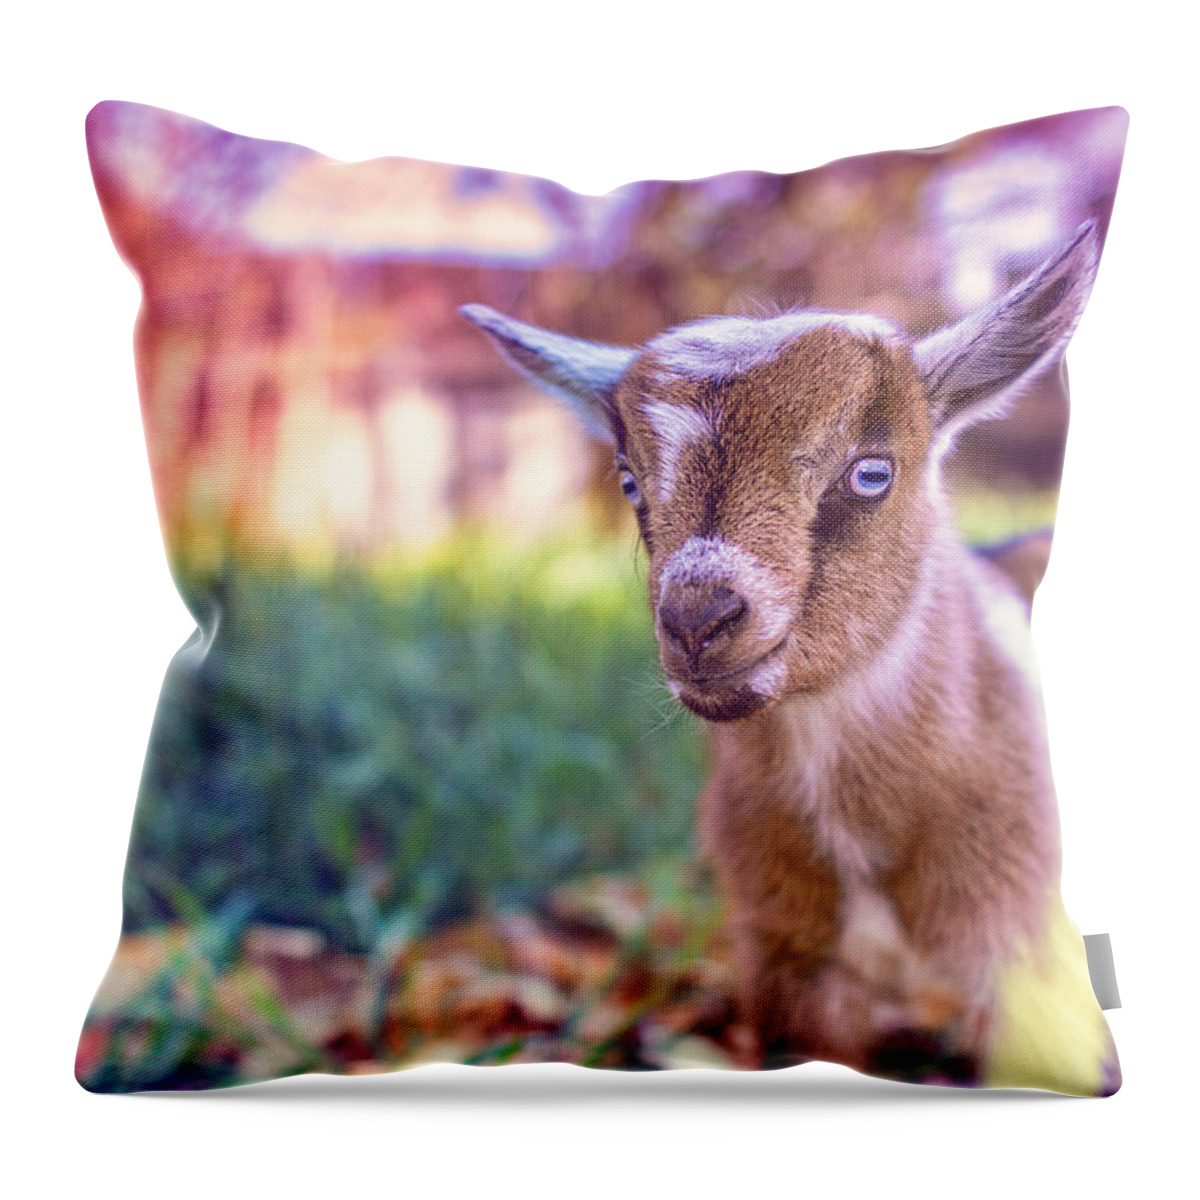 Goat Throw Pillow featuring the photograph Bert by TC Morgan